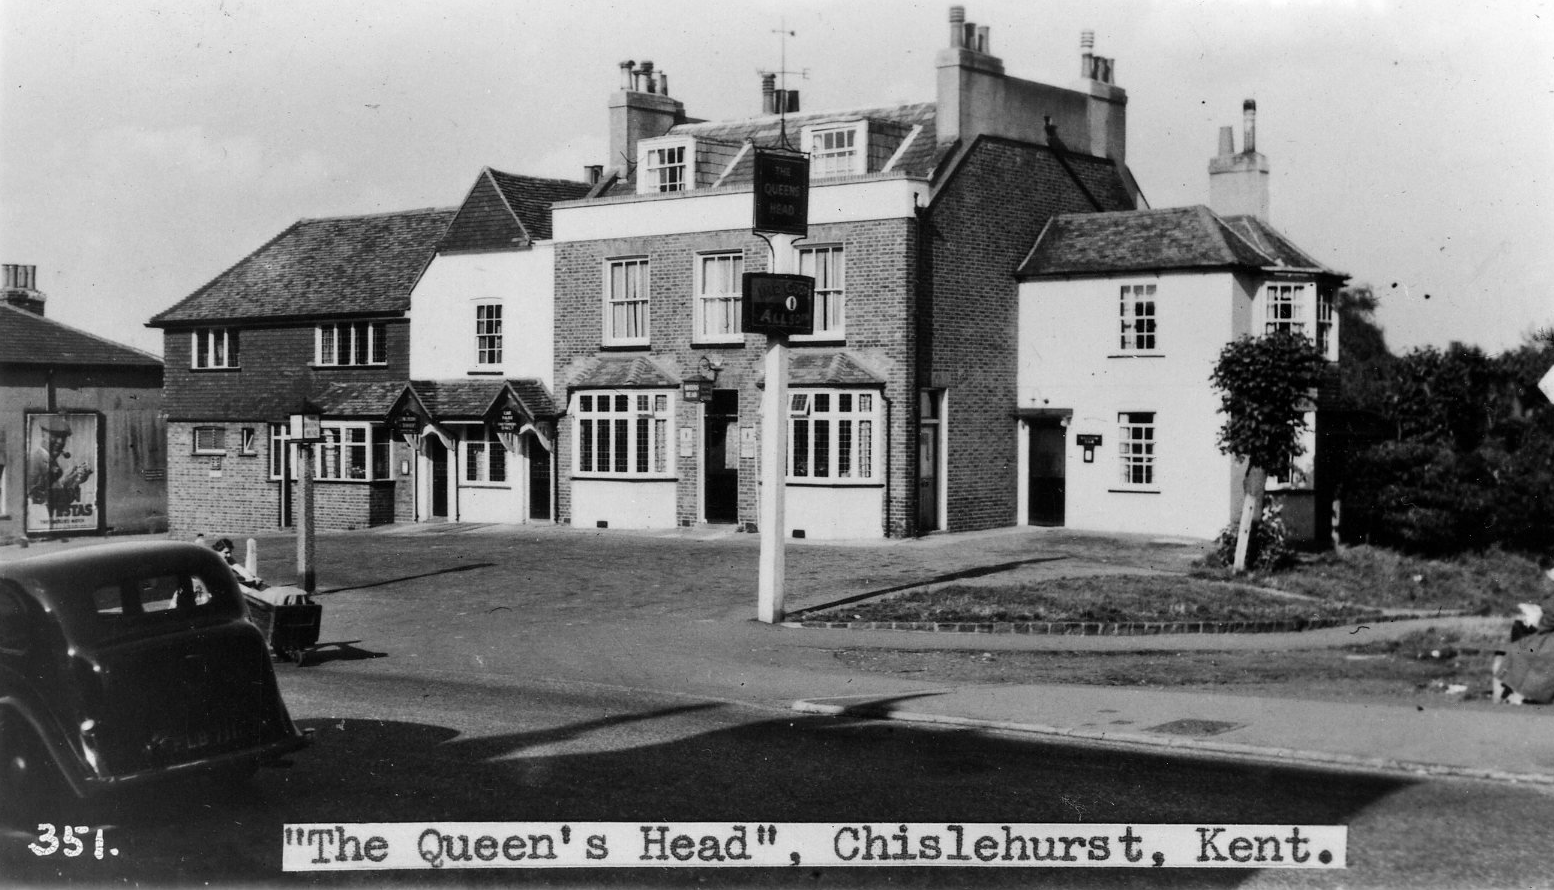 The Queens Head, Chislehurst, Kent